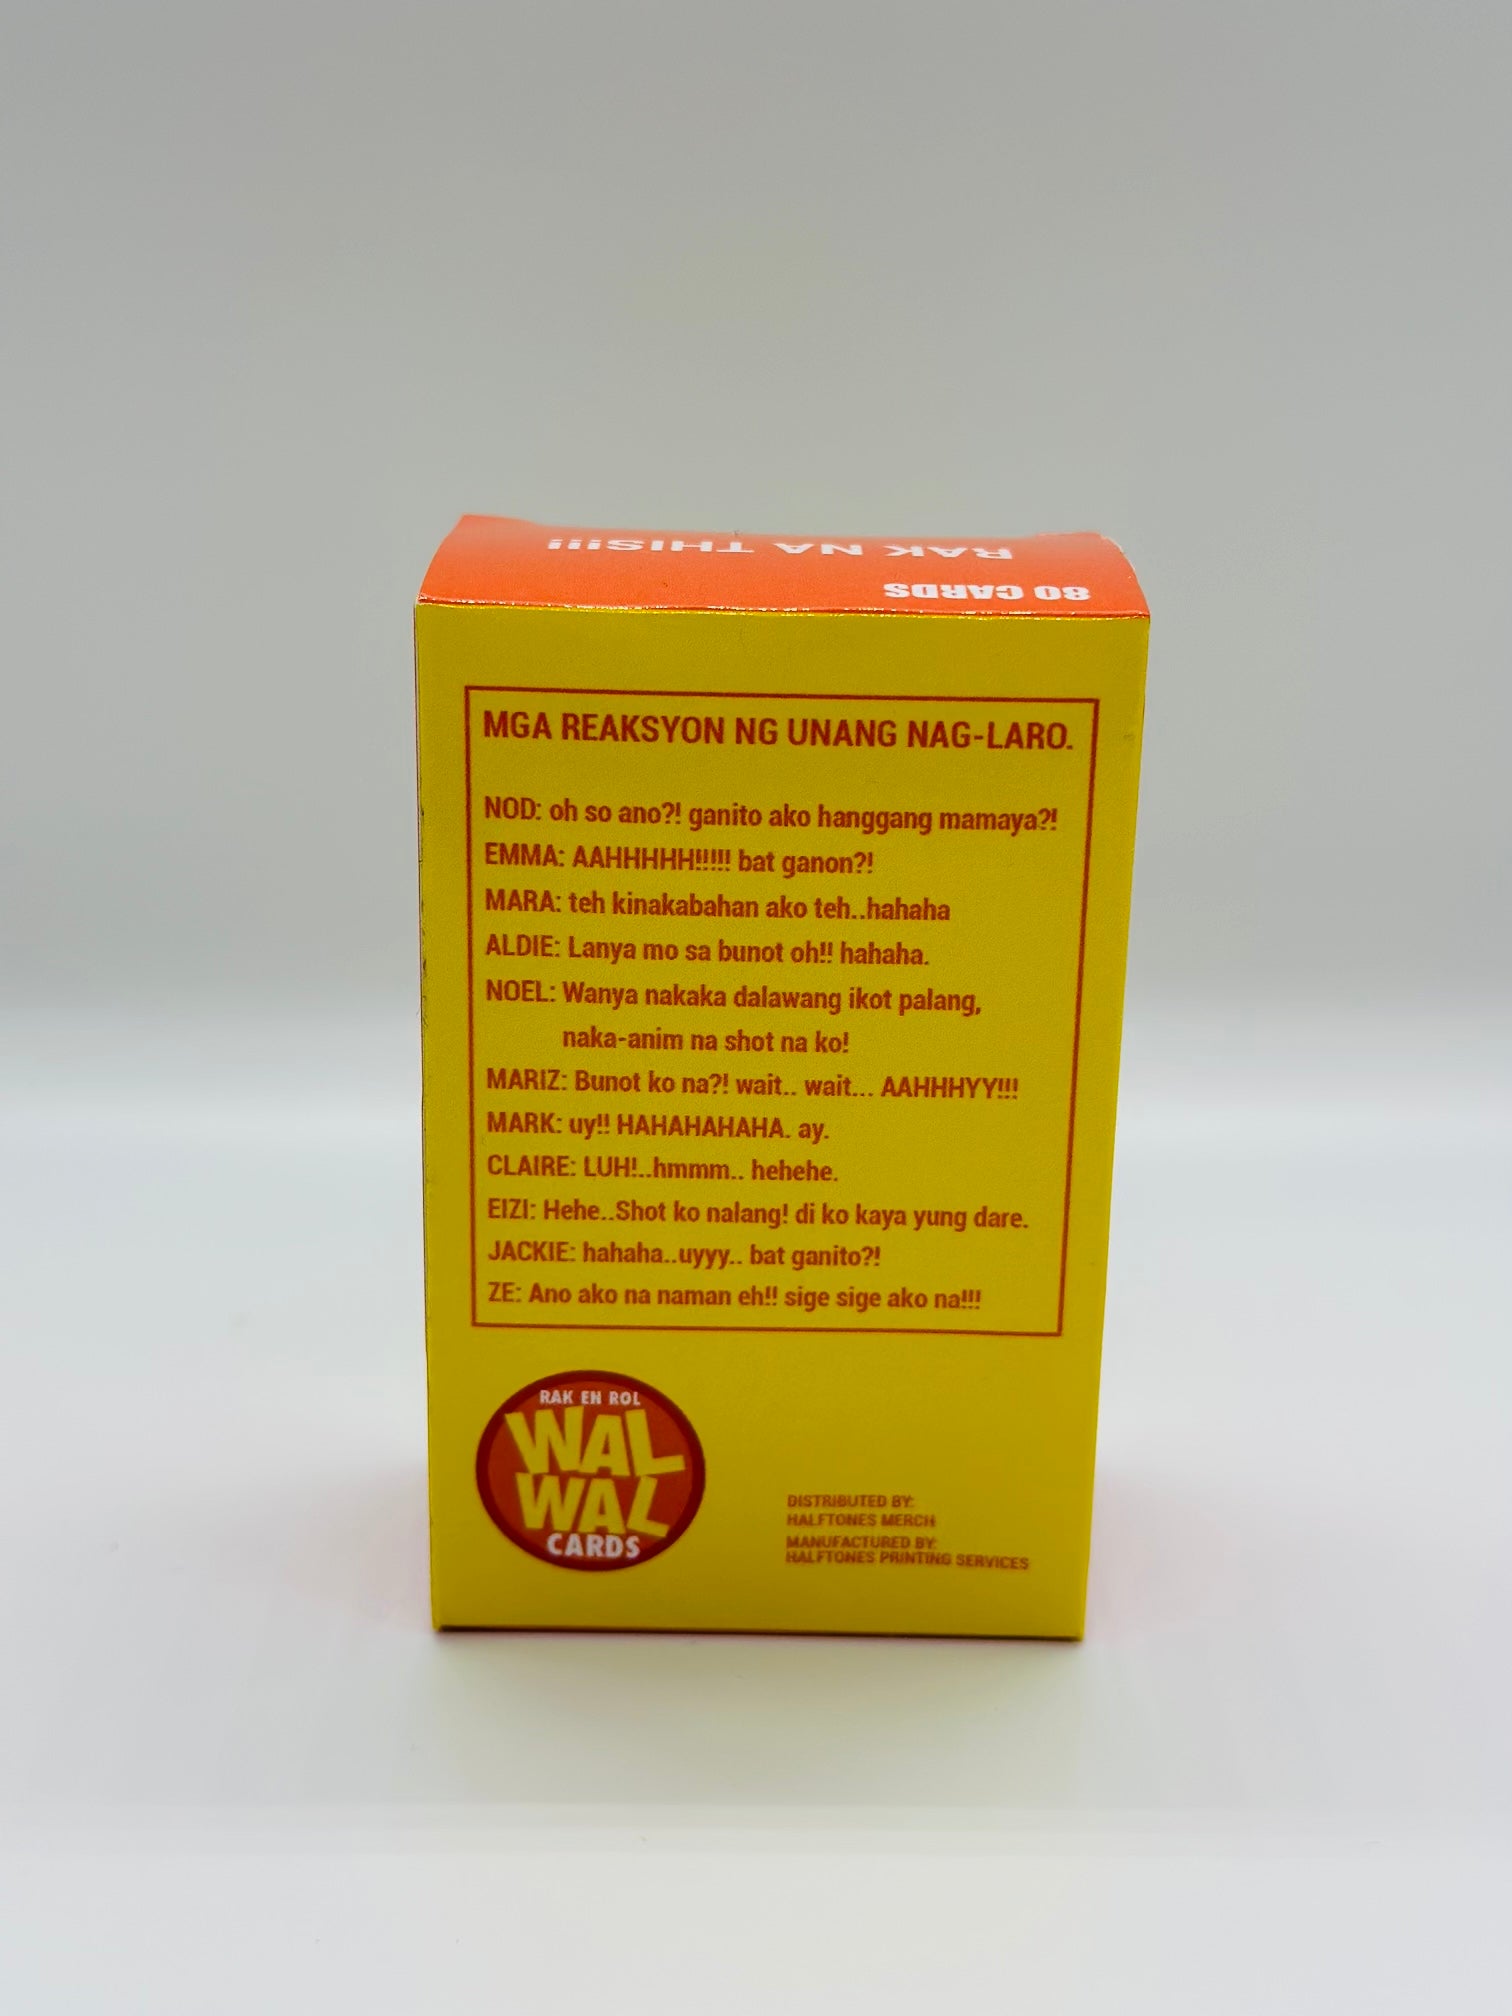 Walwal Cards - Sunog Baga Mode